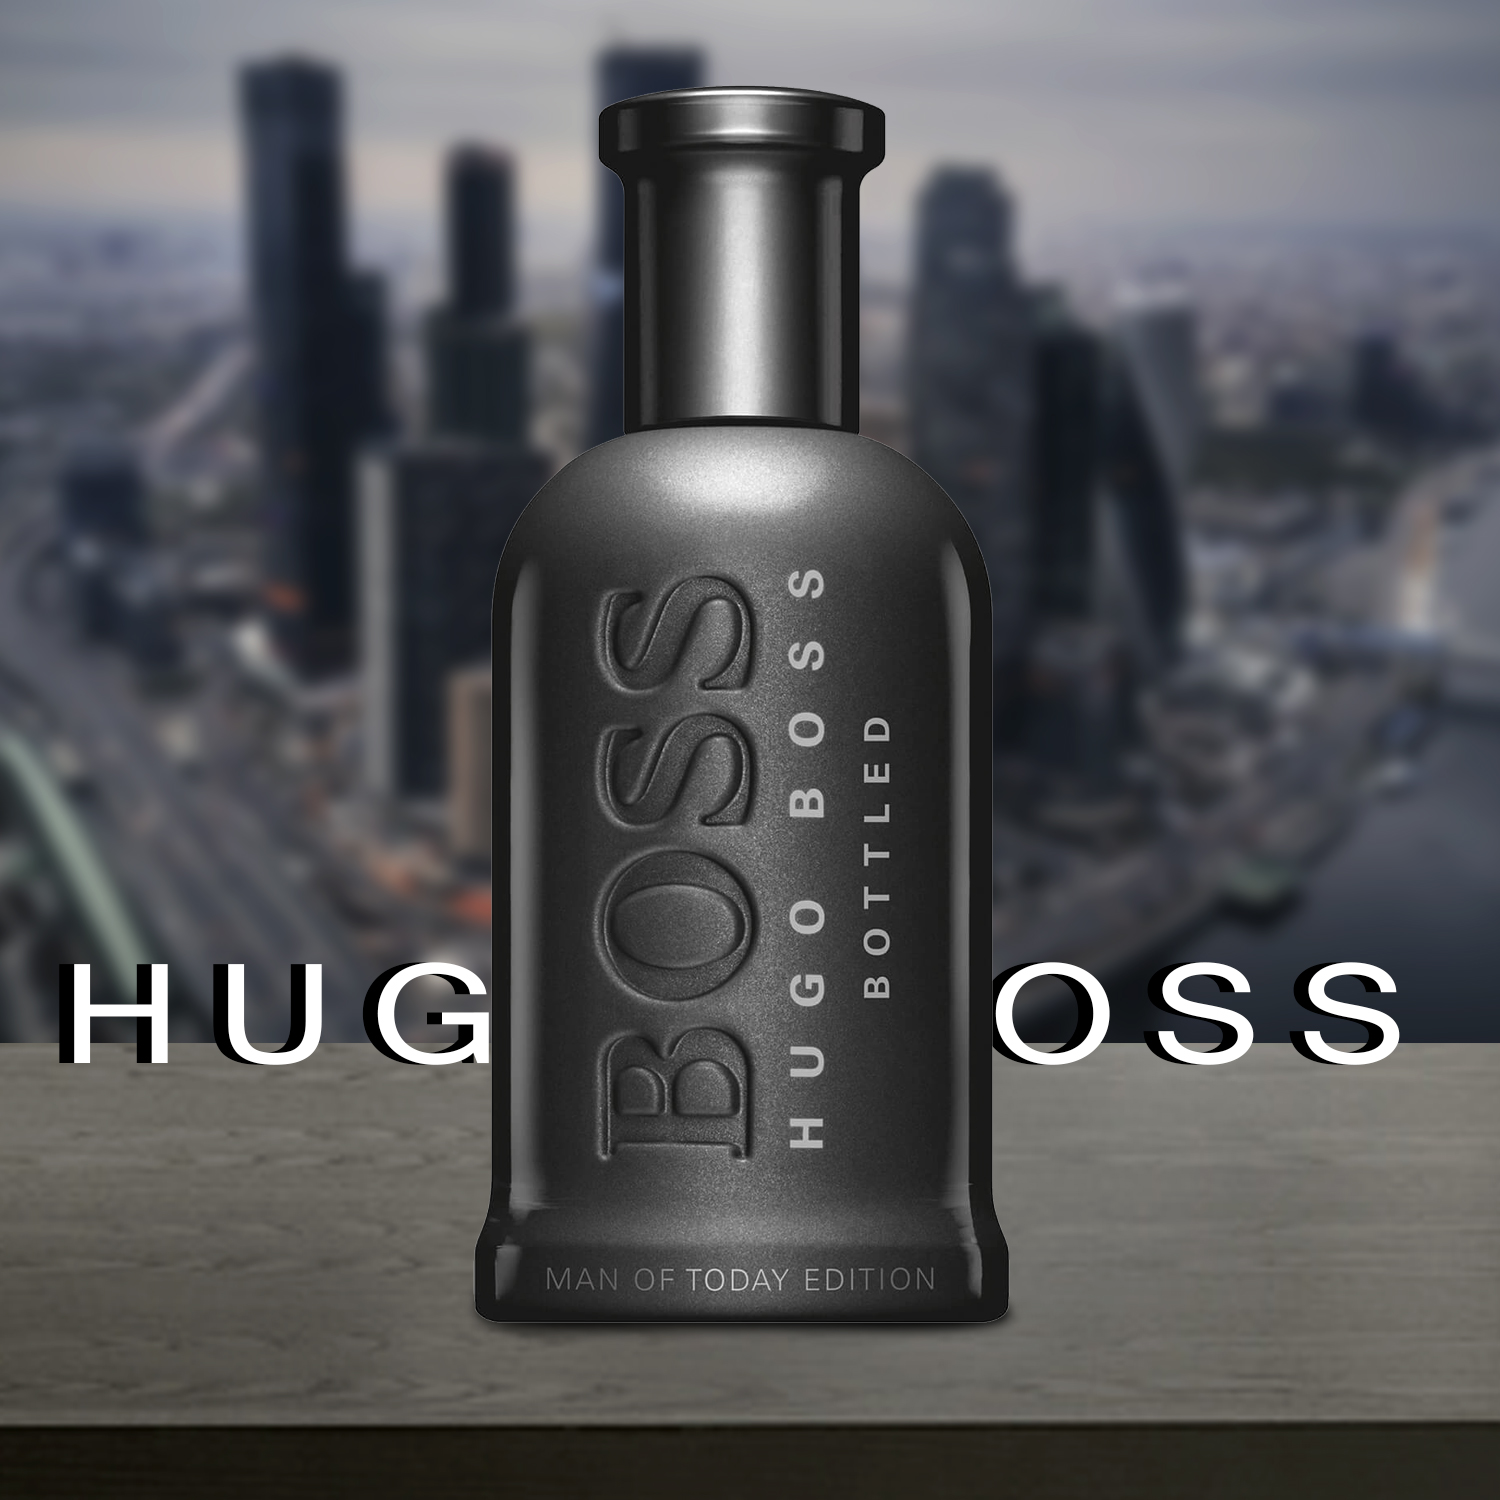 Hugo Boss Man Of Today Edition Hot Sale, 50% OFF | www.vetyvet.com